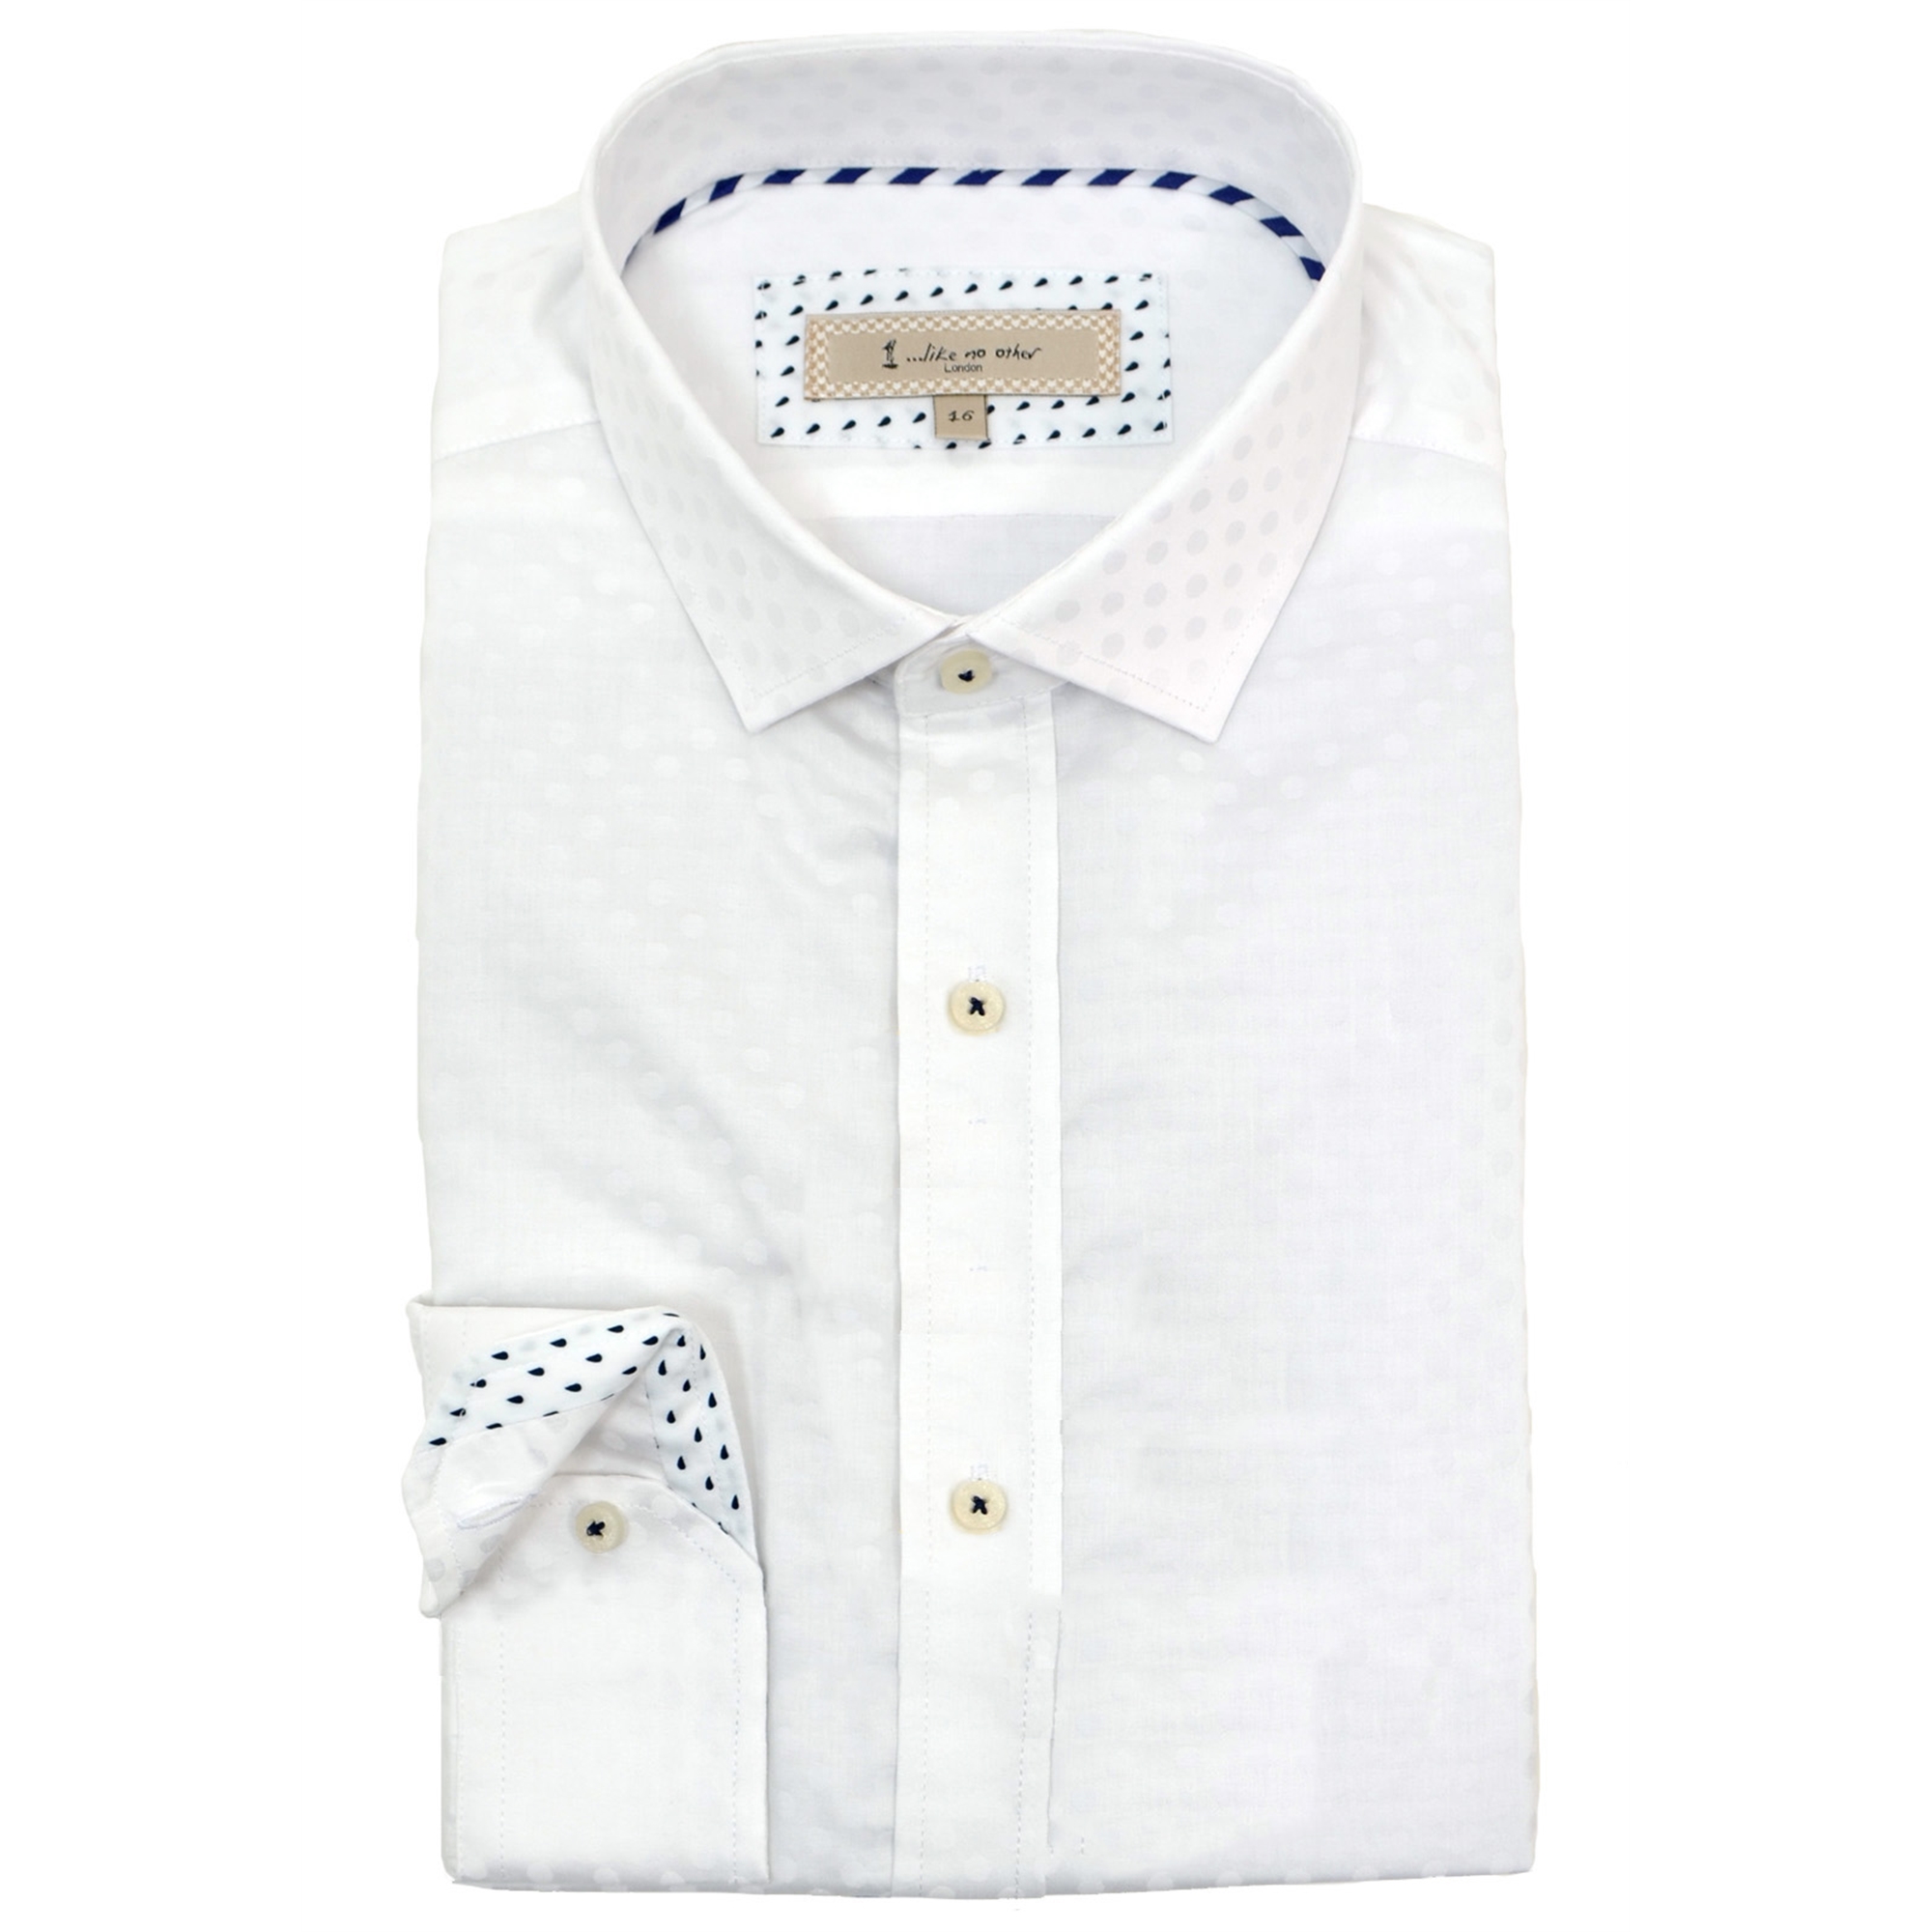 Carlisle White Formal Shirt | 1 Like No Other